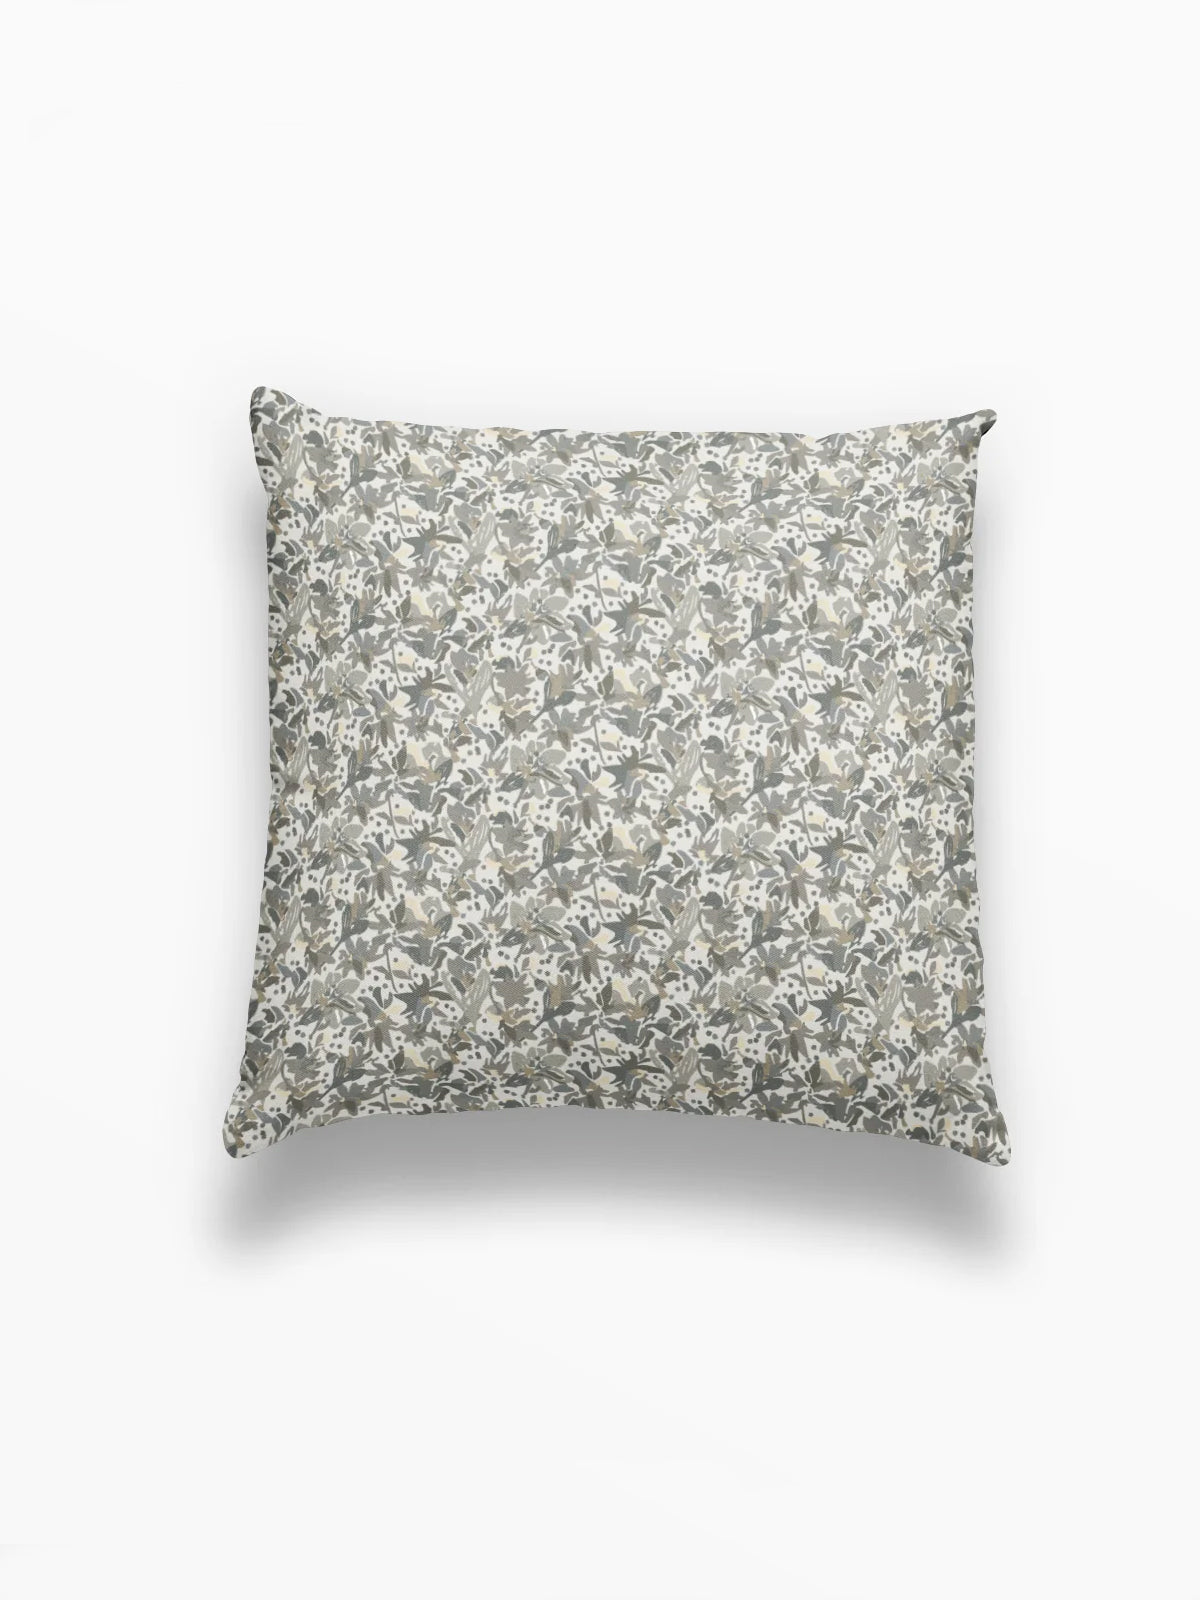 Eden Lichen Pillow Cover